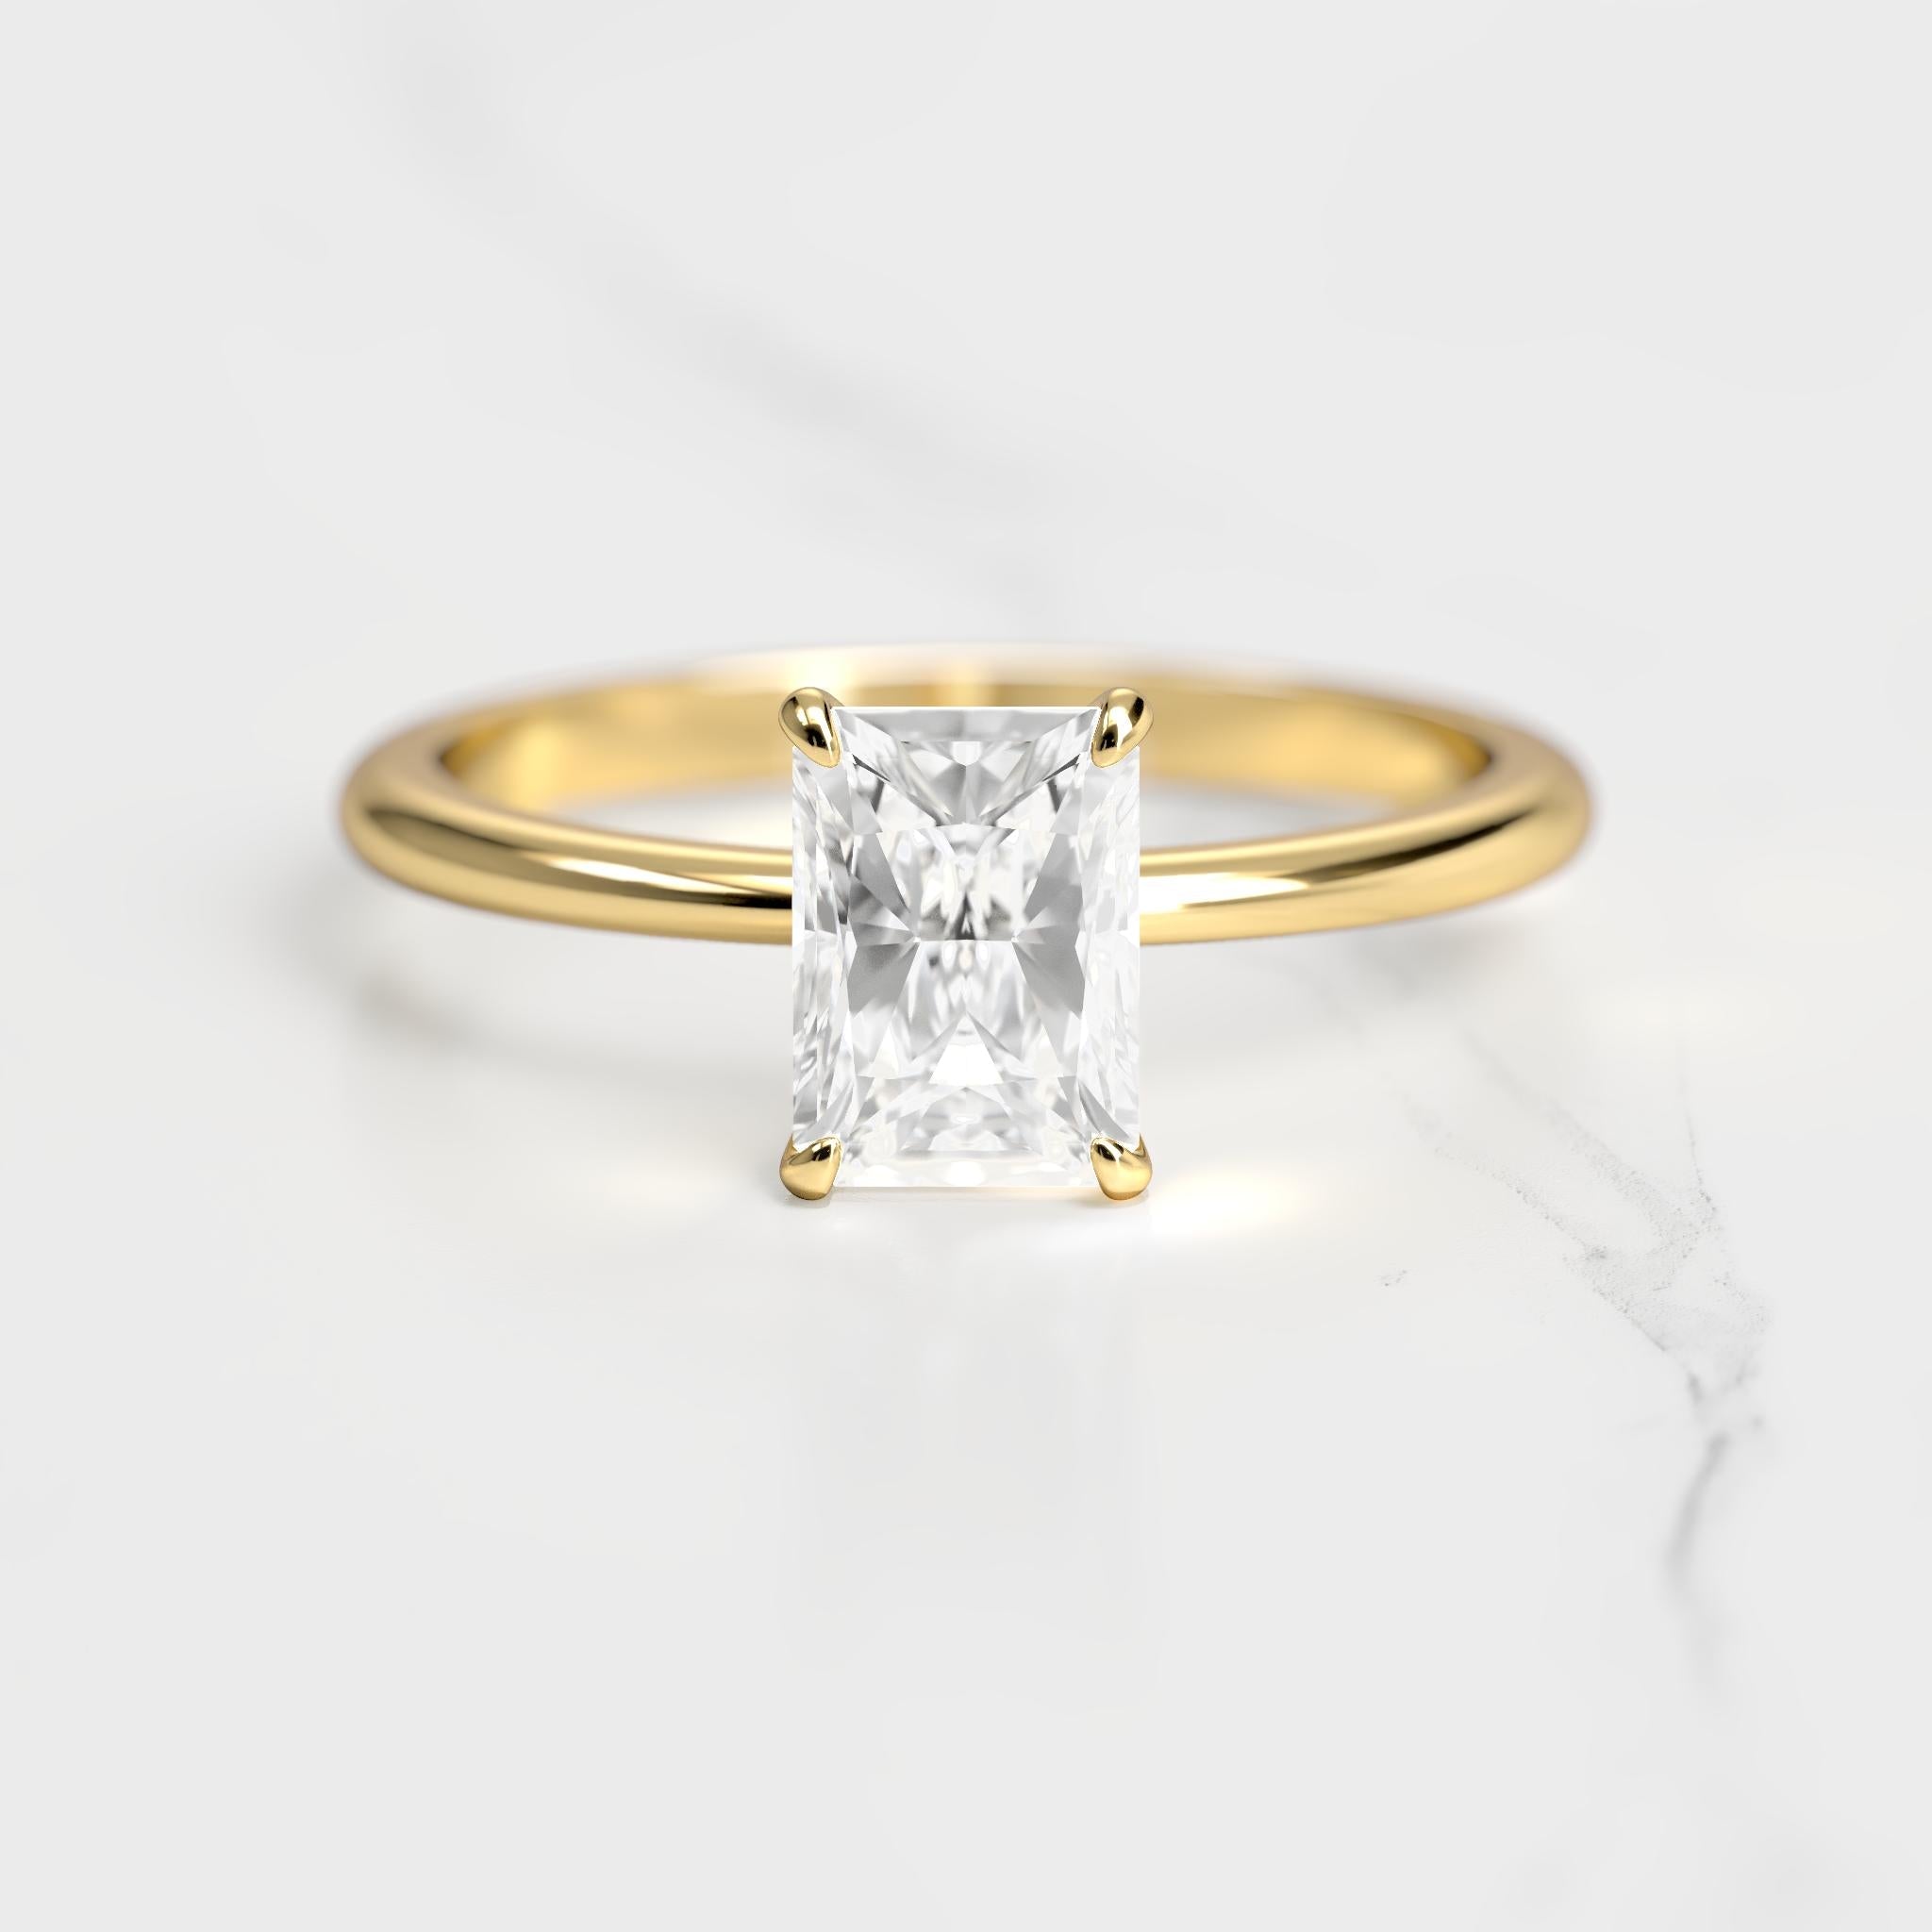 Radiant Solitaire Diamond Ring - 14k yellow gold / 1ct / lab diamond